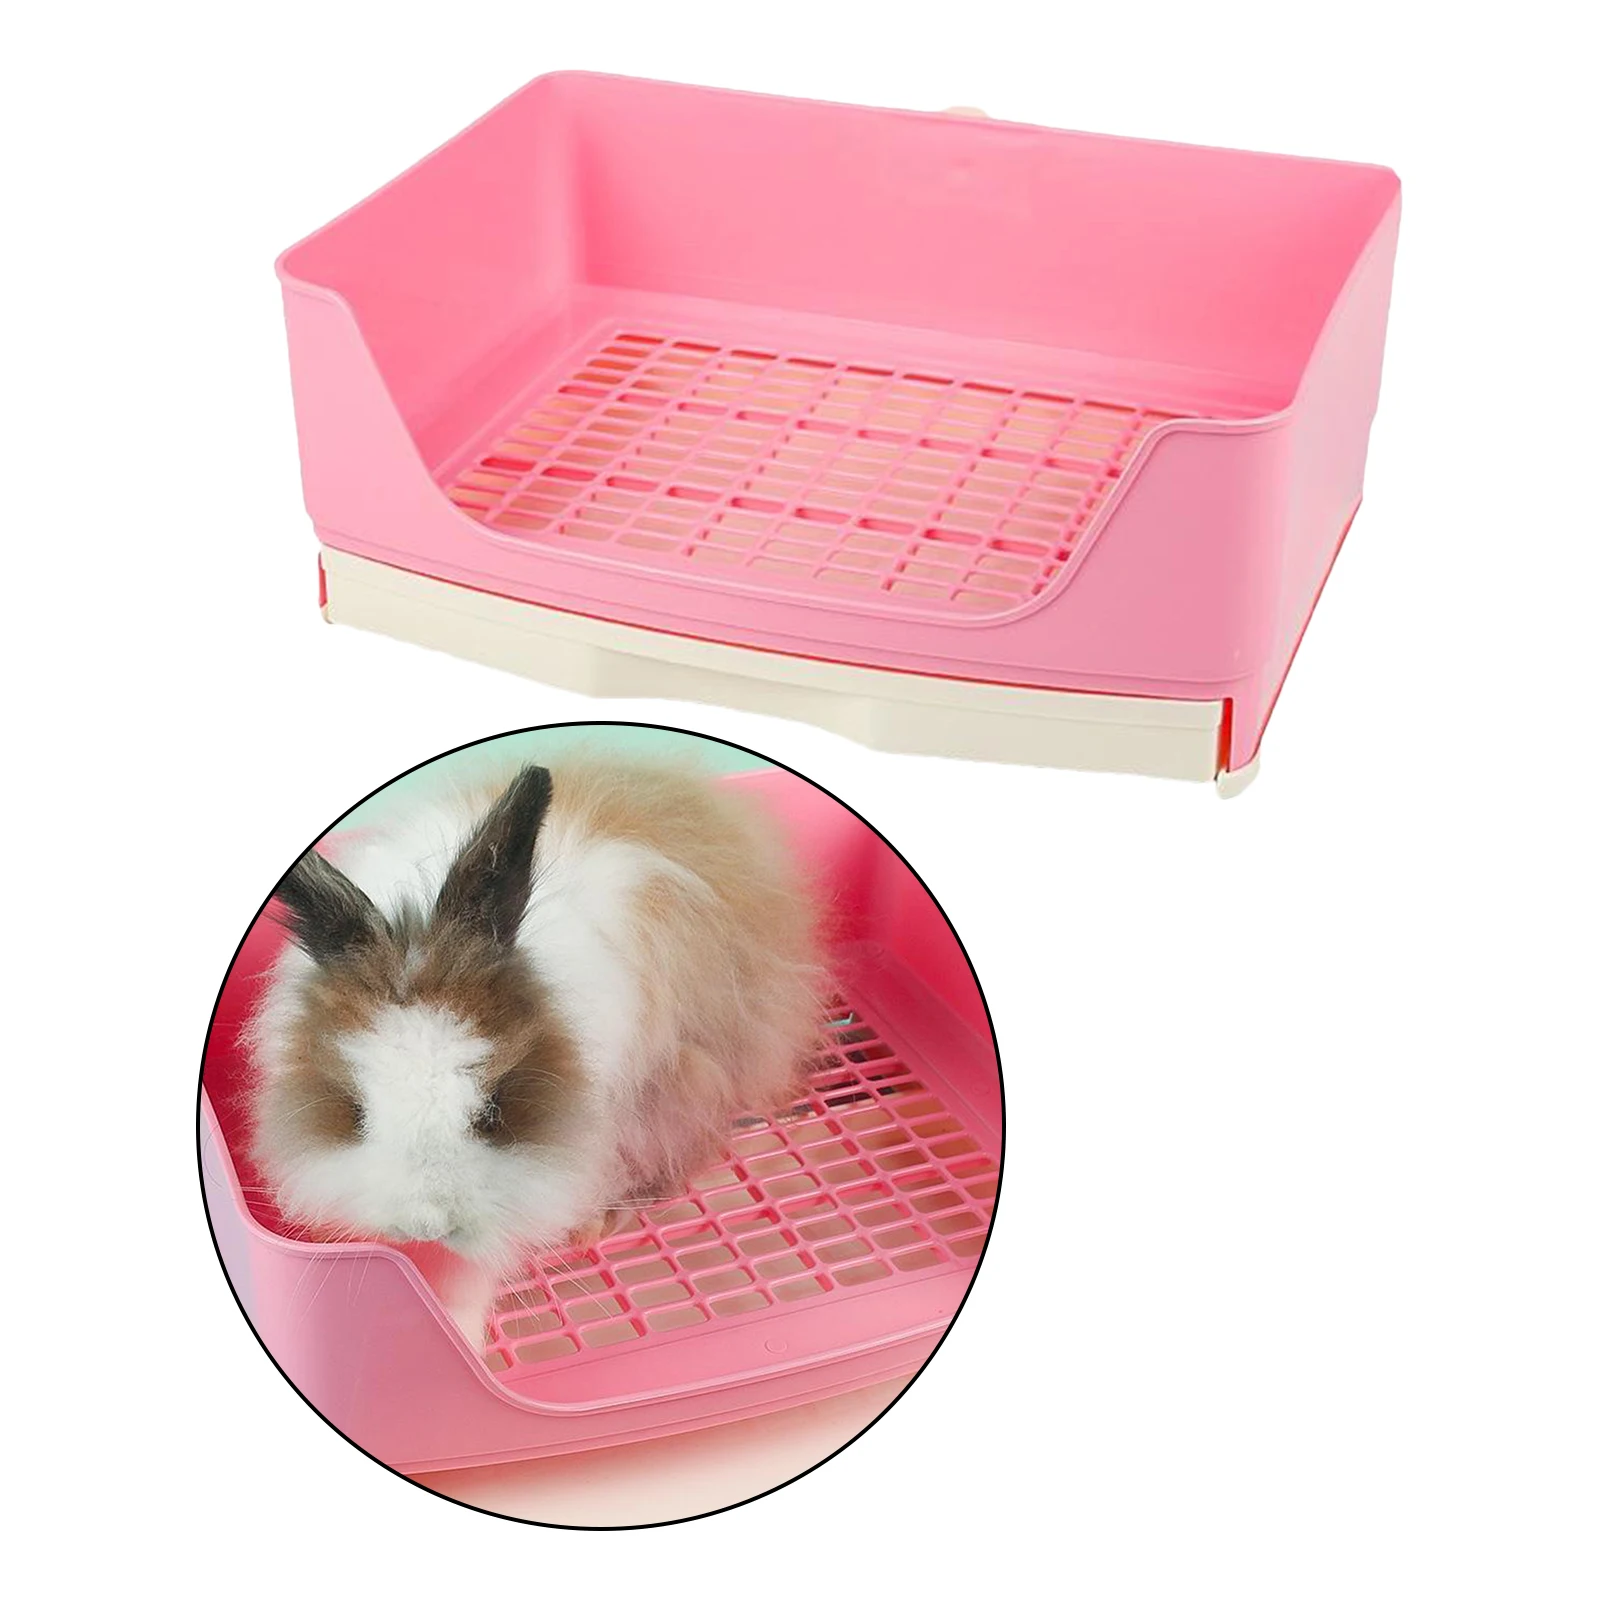 Pet Small Rat Toilet Square Potty Trainer Corner Litter Bedding Box Pet Pan for Small Animal/Rabbit/Guinea Pig Galesaur Ferret